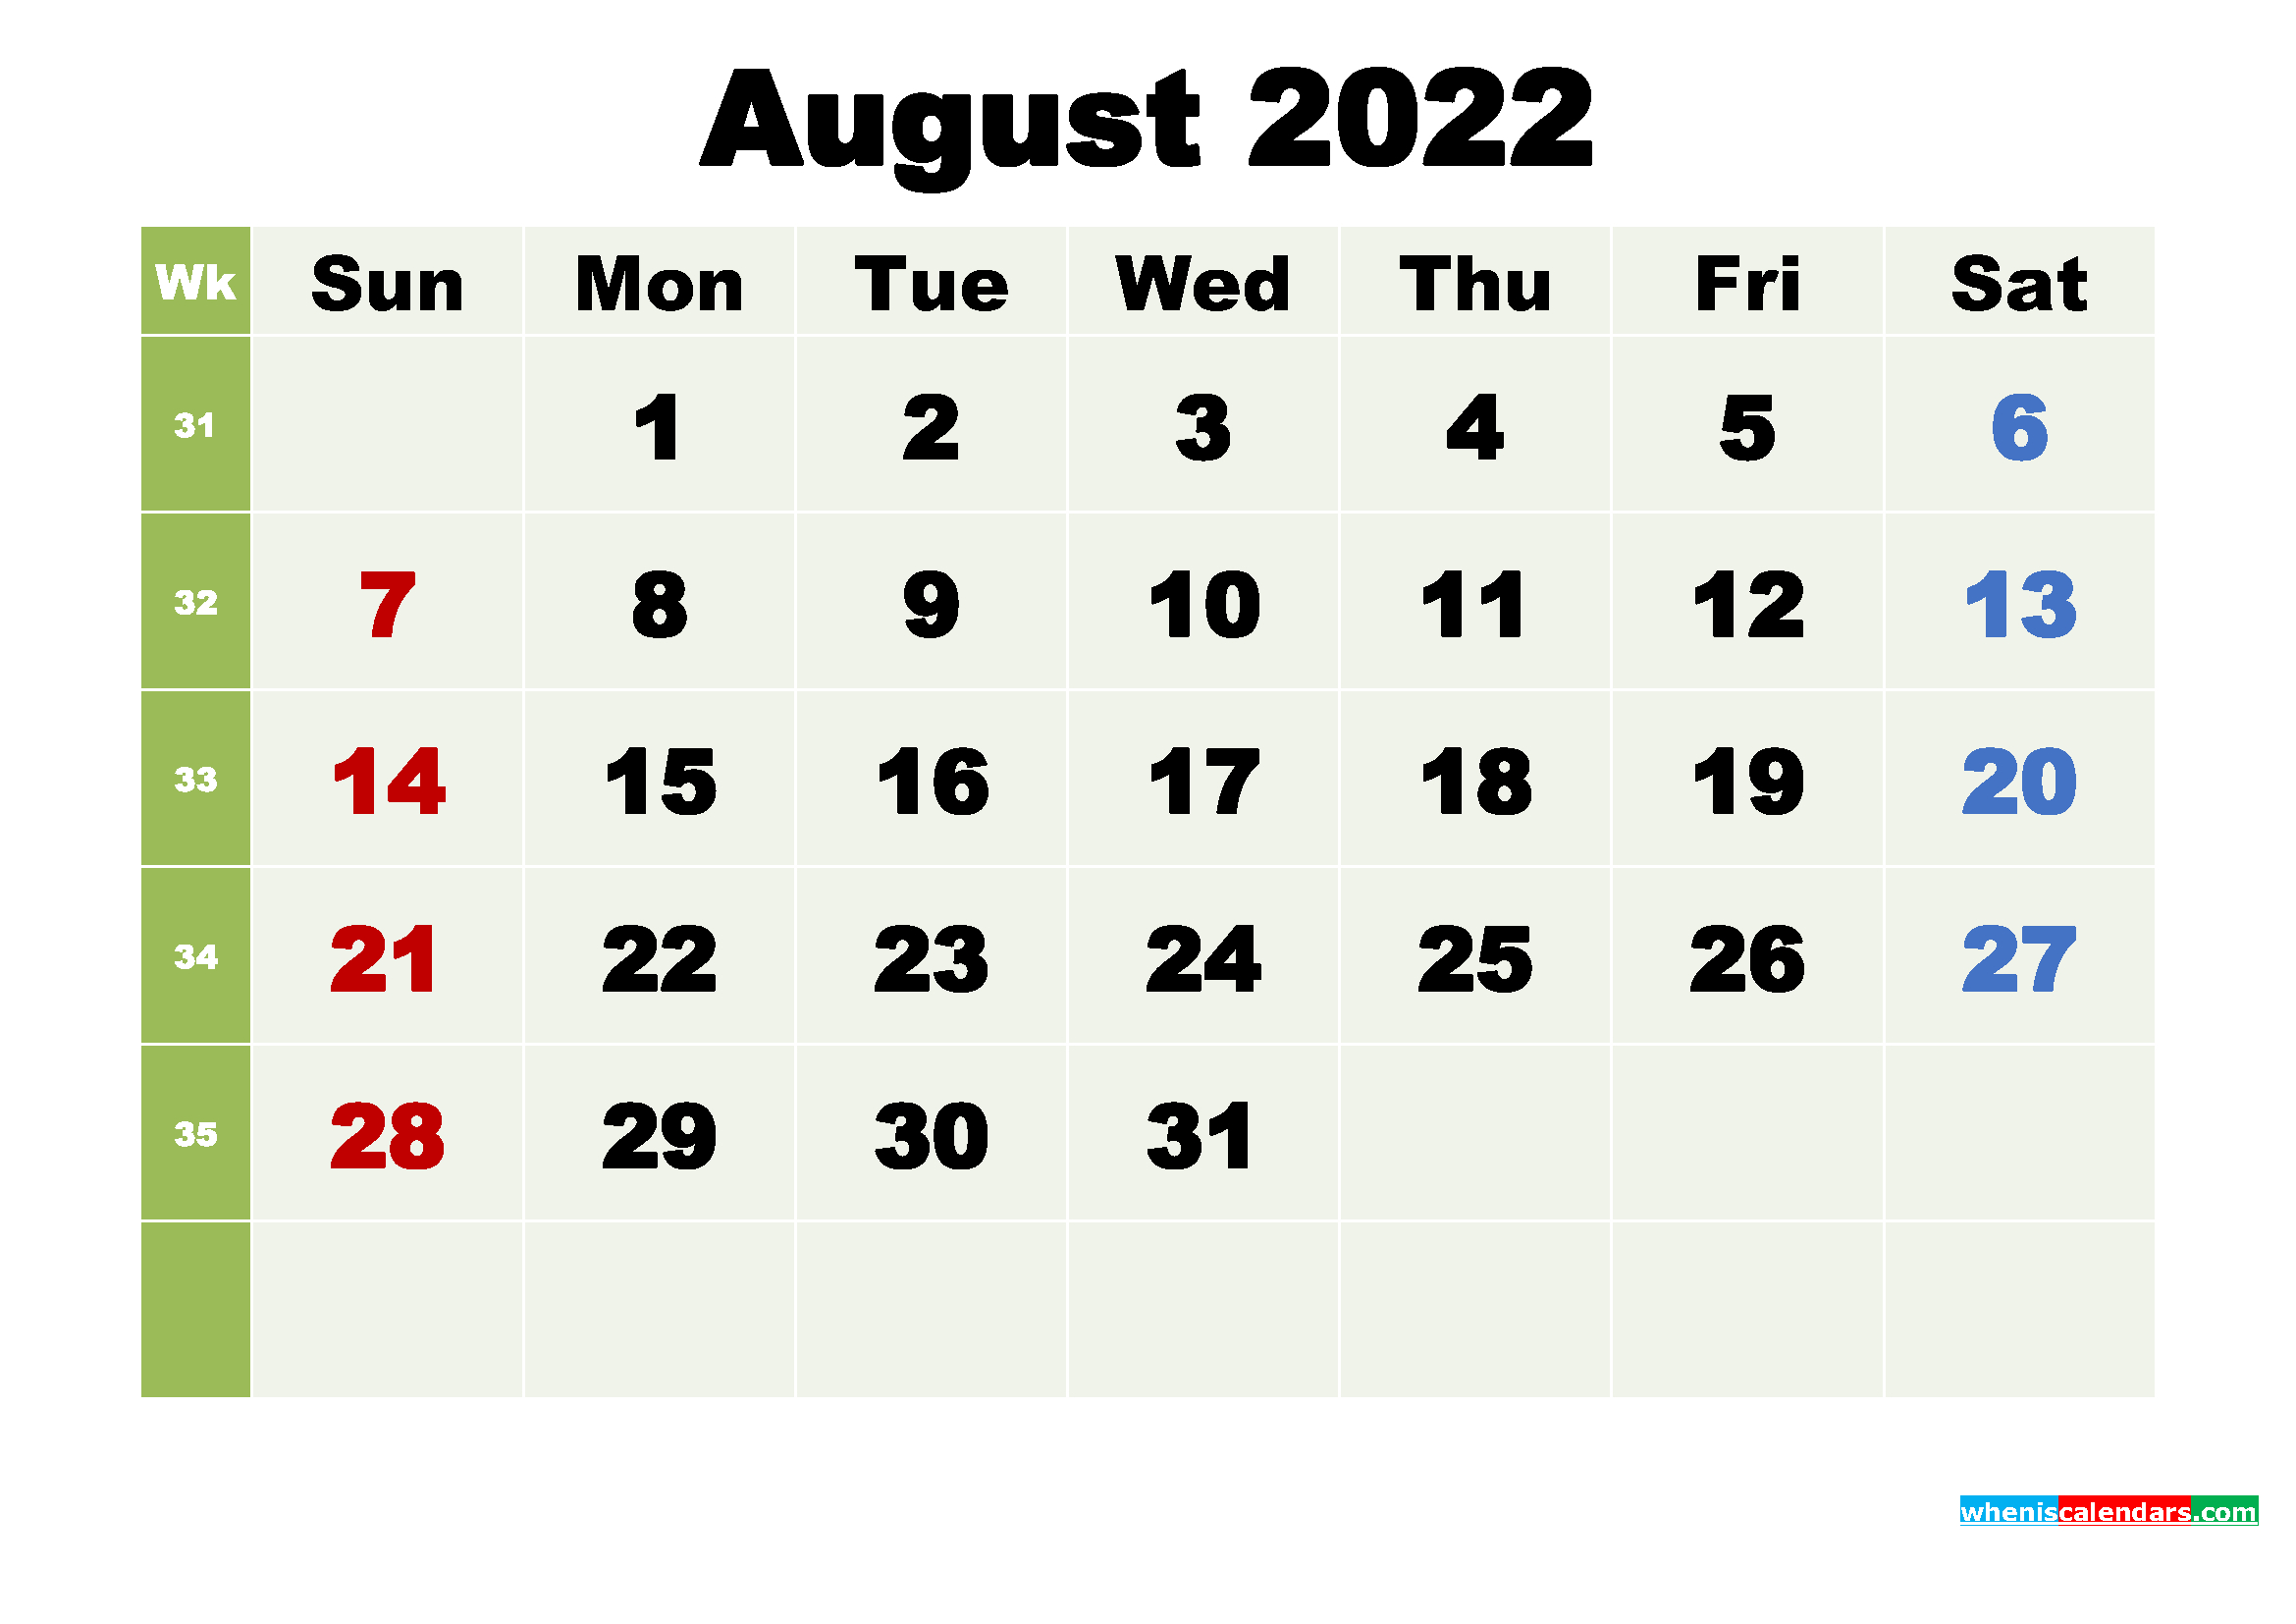 Catch Calendar February 22 2022